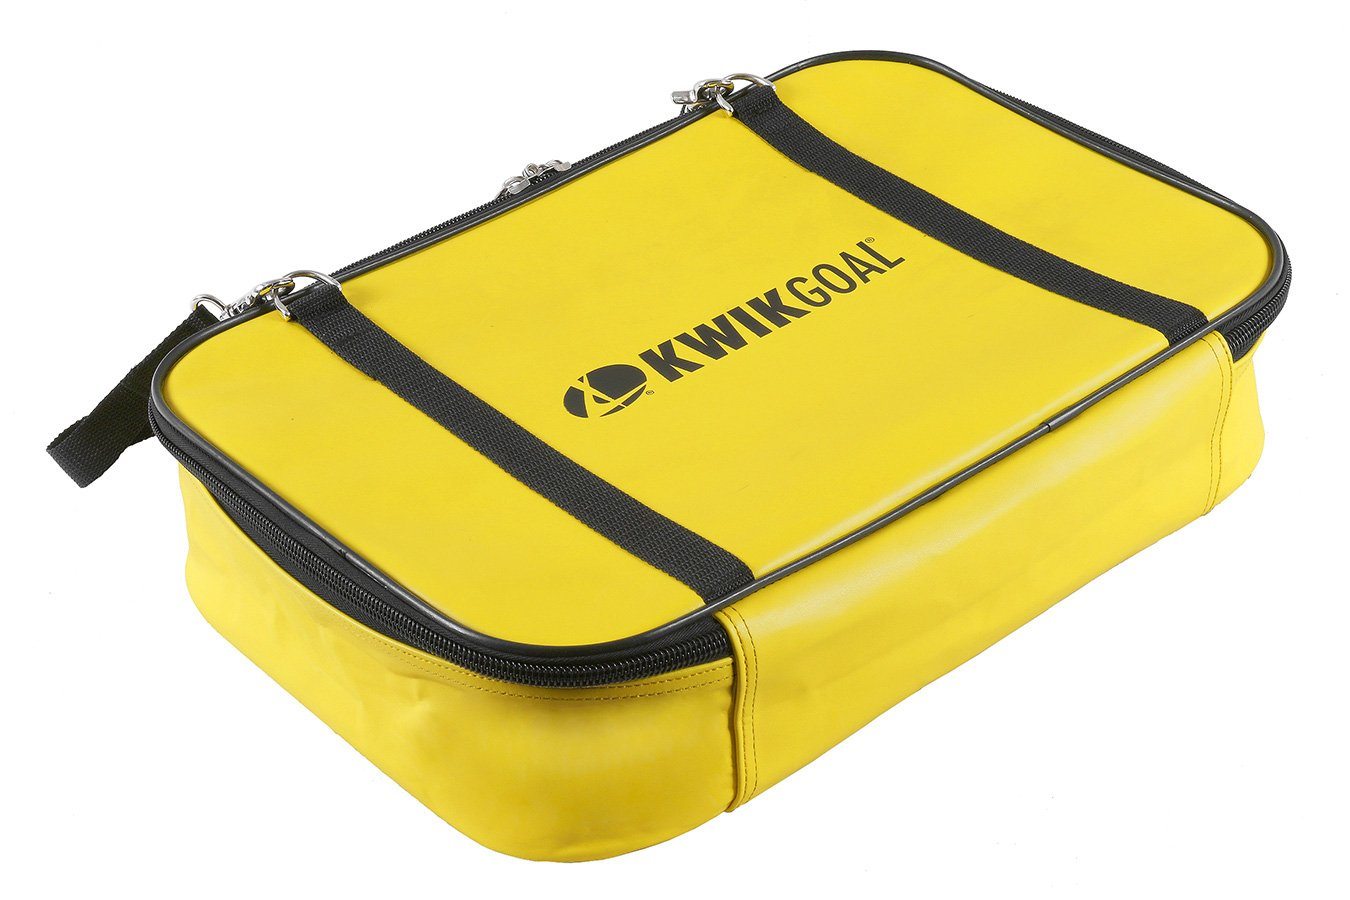 Kwikgoal Kwik Fill Anchor Bag | 10B59 Goal accessories Kwikgoal 